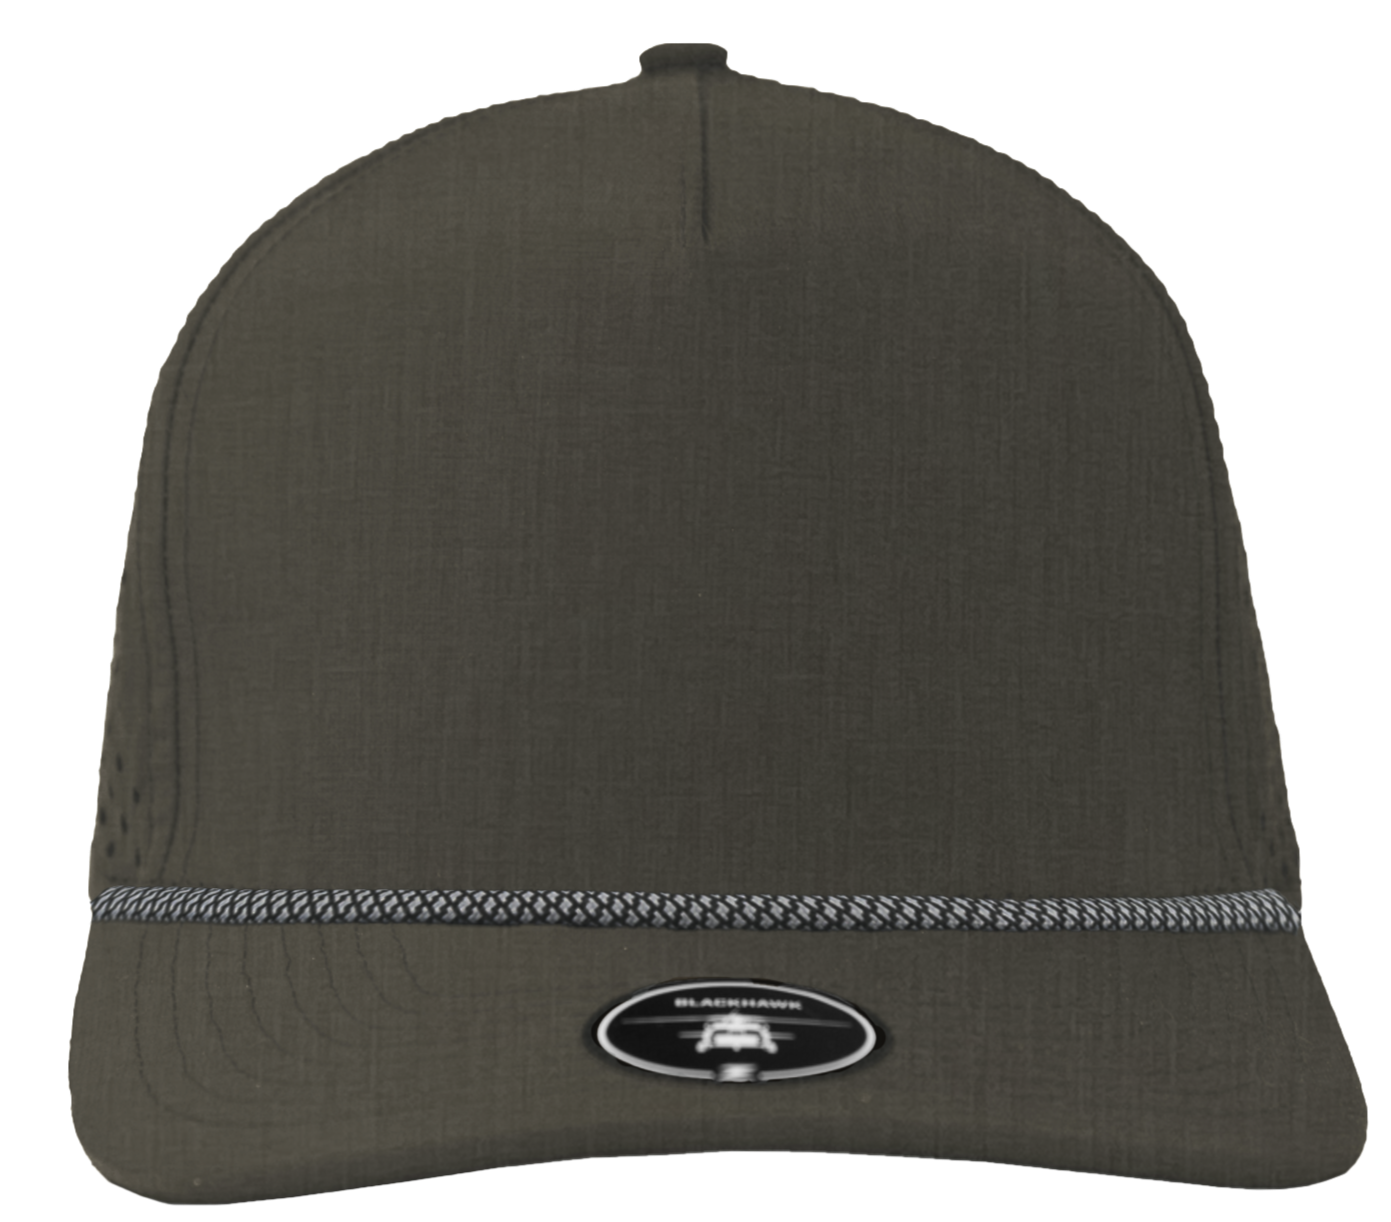 Blackhawk Graphite grey Custom Hat  chainlink rope  5 panel snapback hat